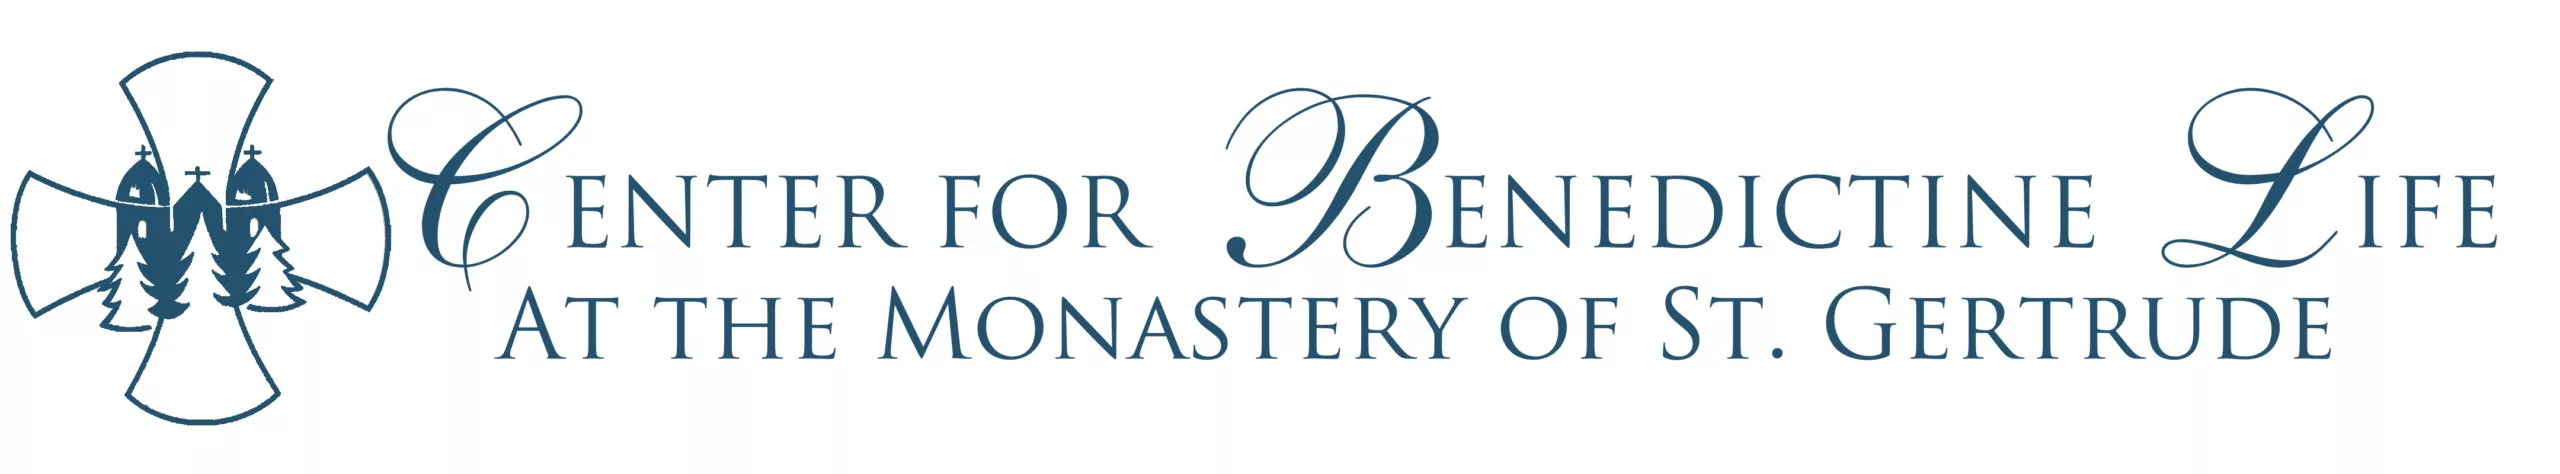 Center for Benedictine Life